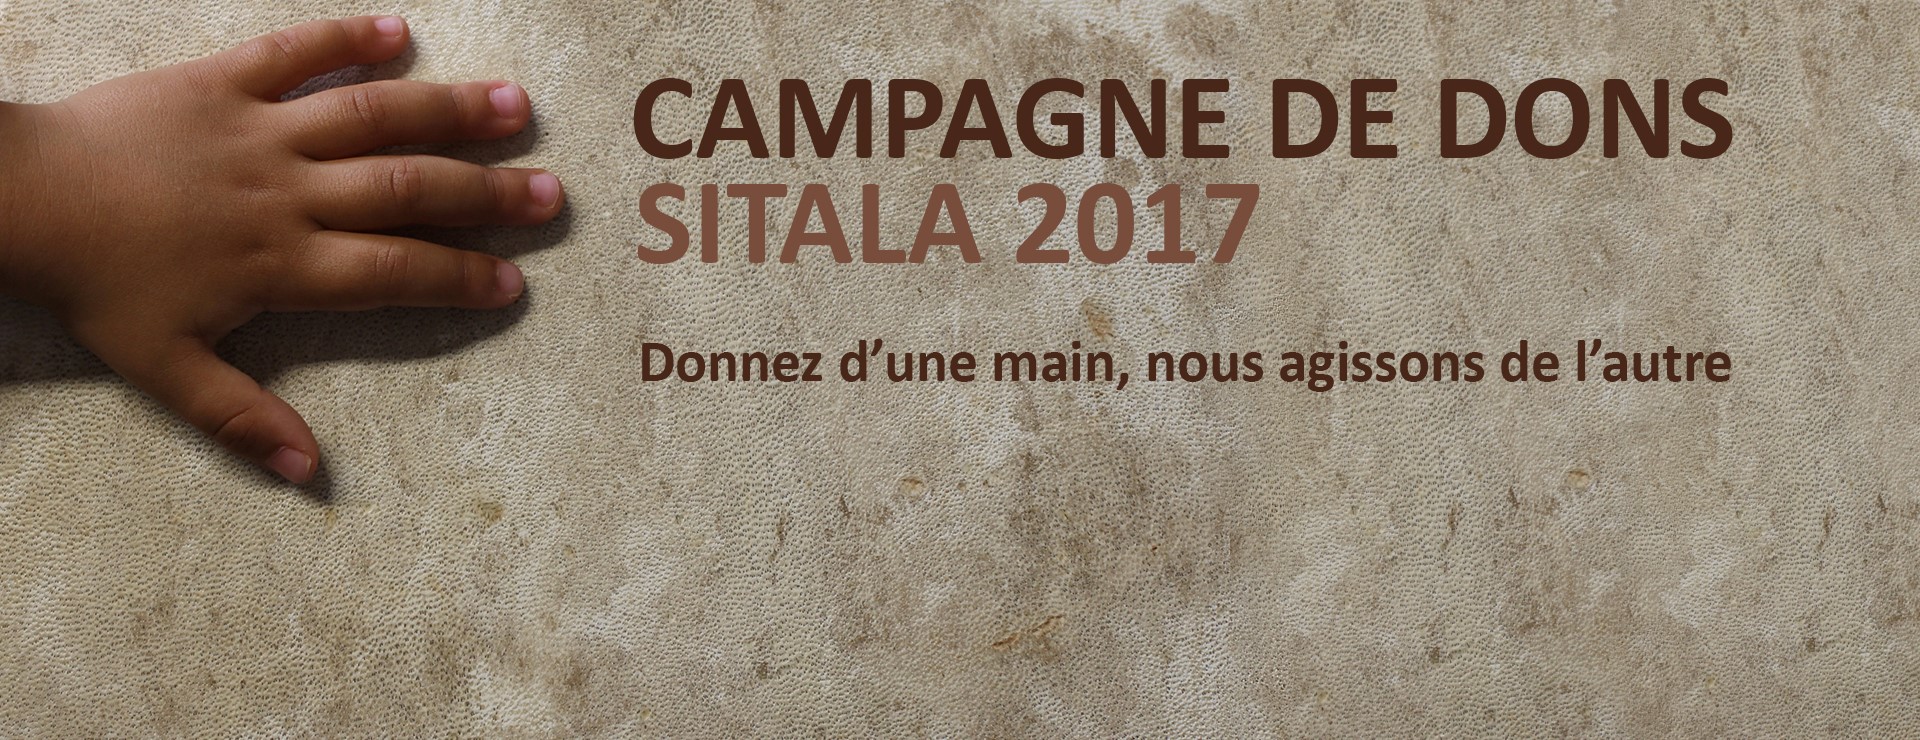 Campagne De Dons 2017 7791